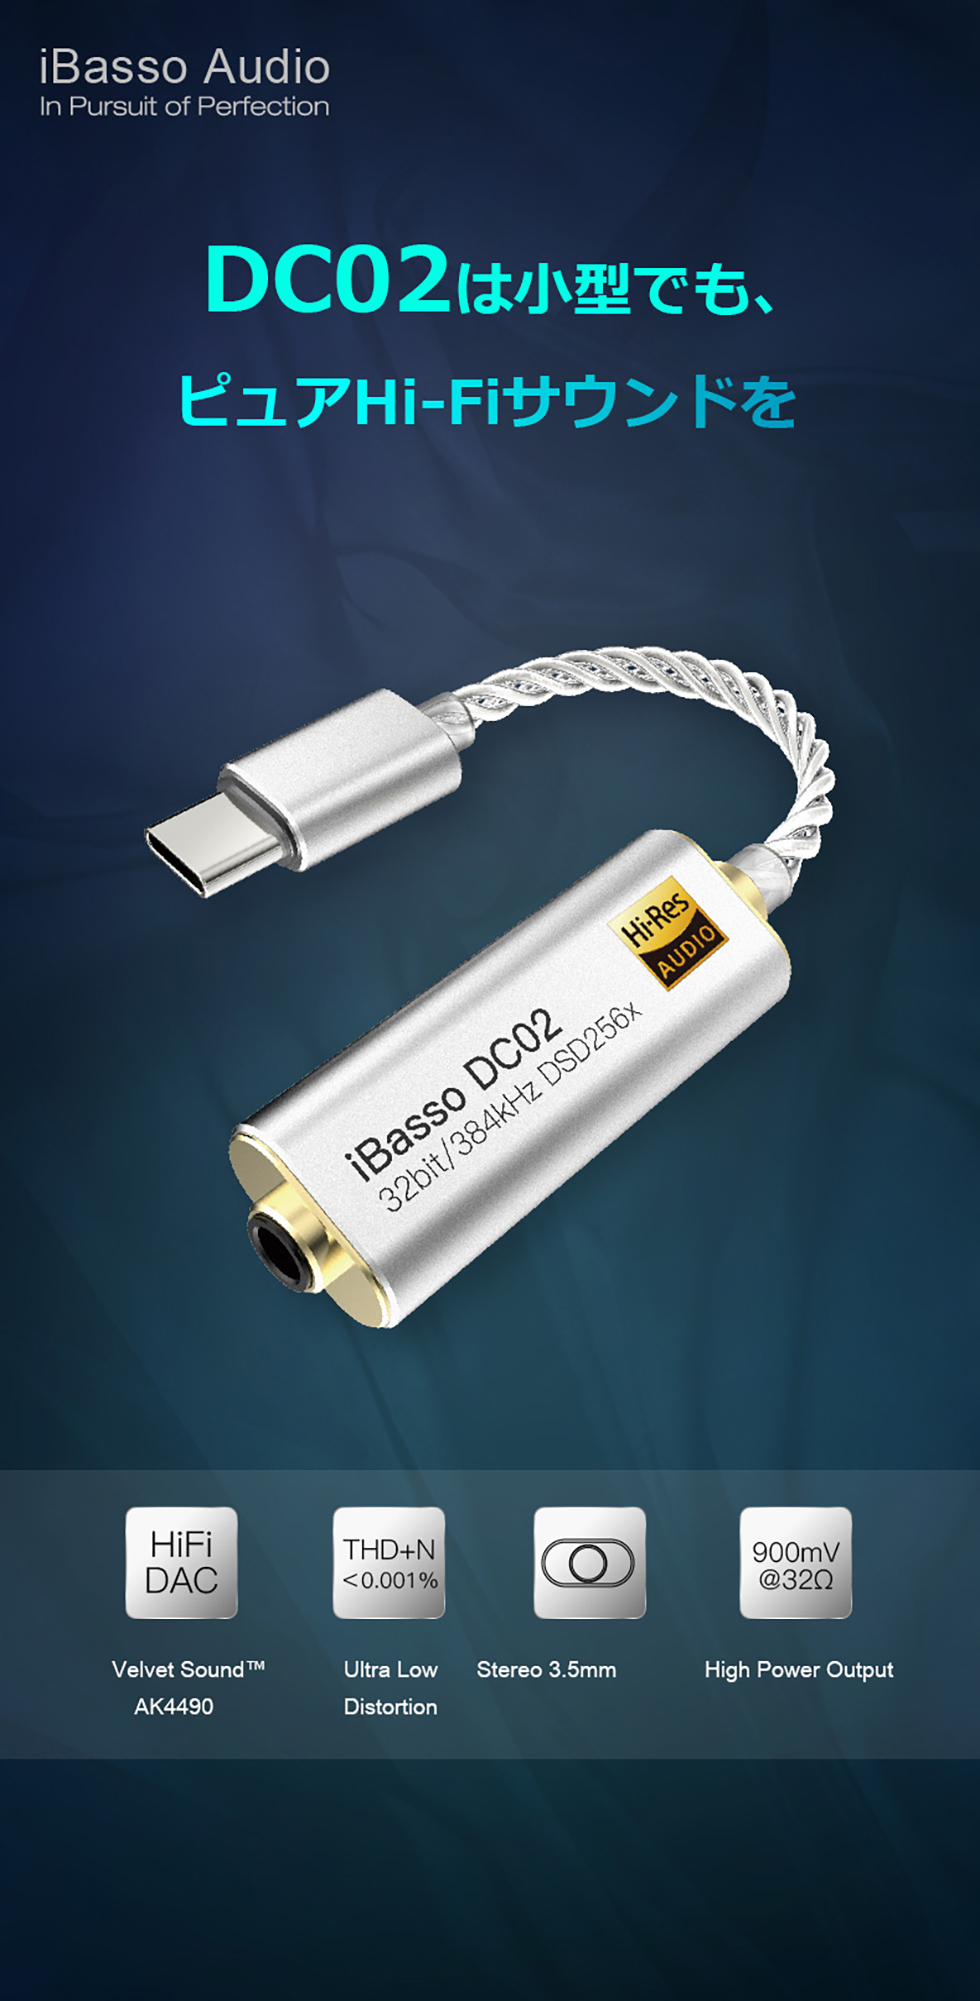 iBasso Audio DC02 USB DAC